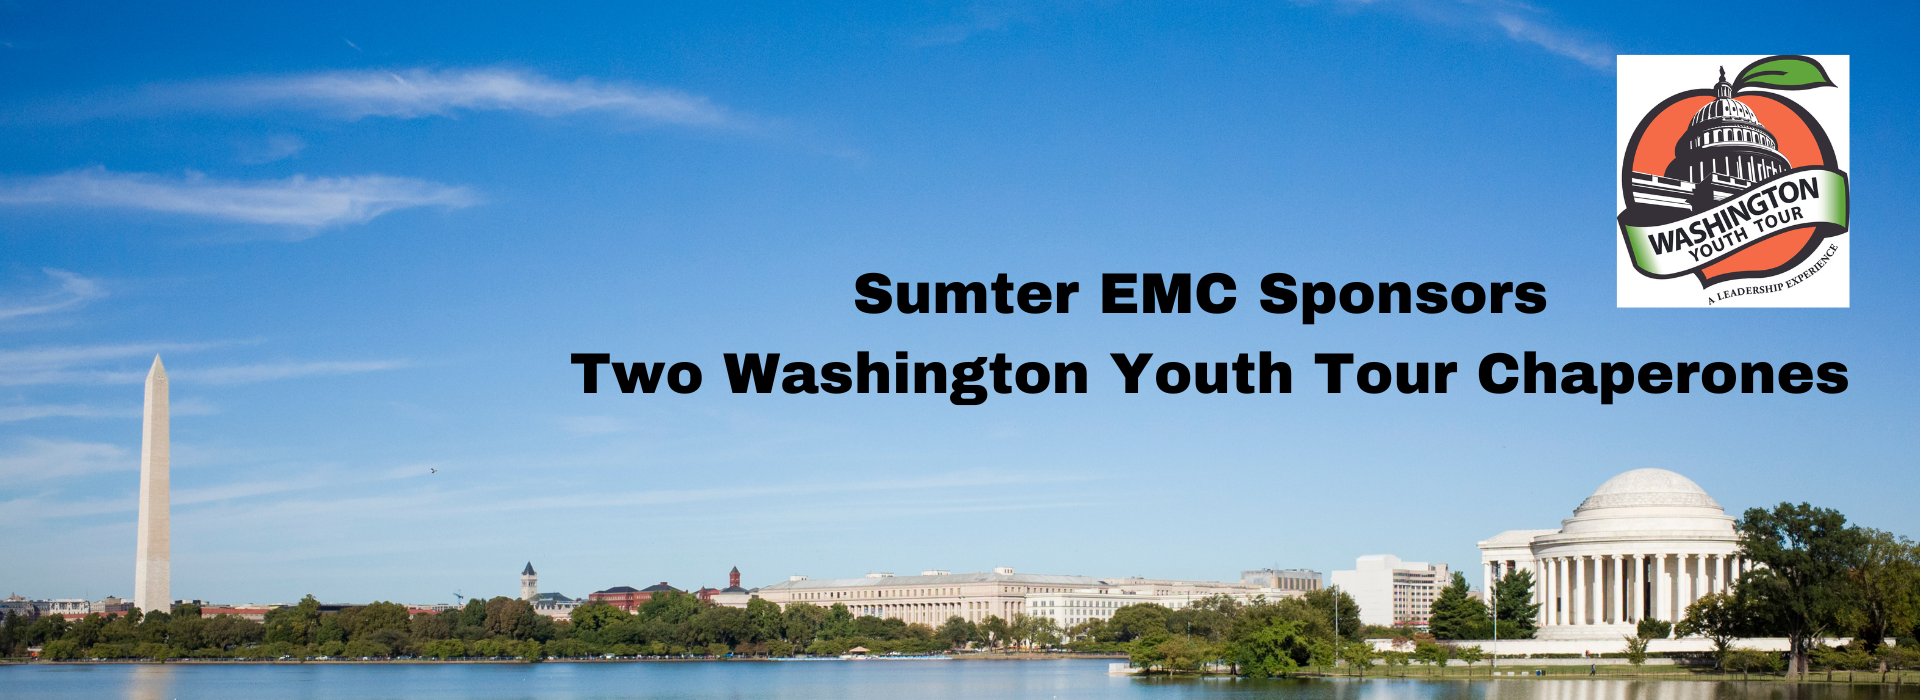 Sumter EMC Sponsors Two Washington Youth Tour Chaperones